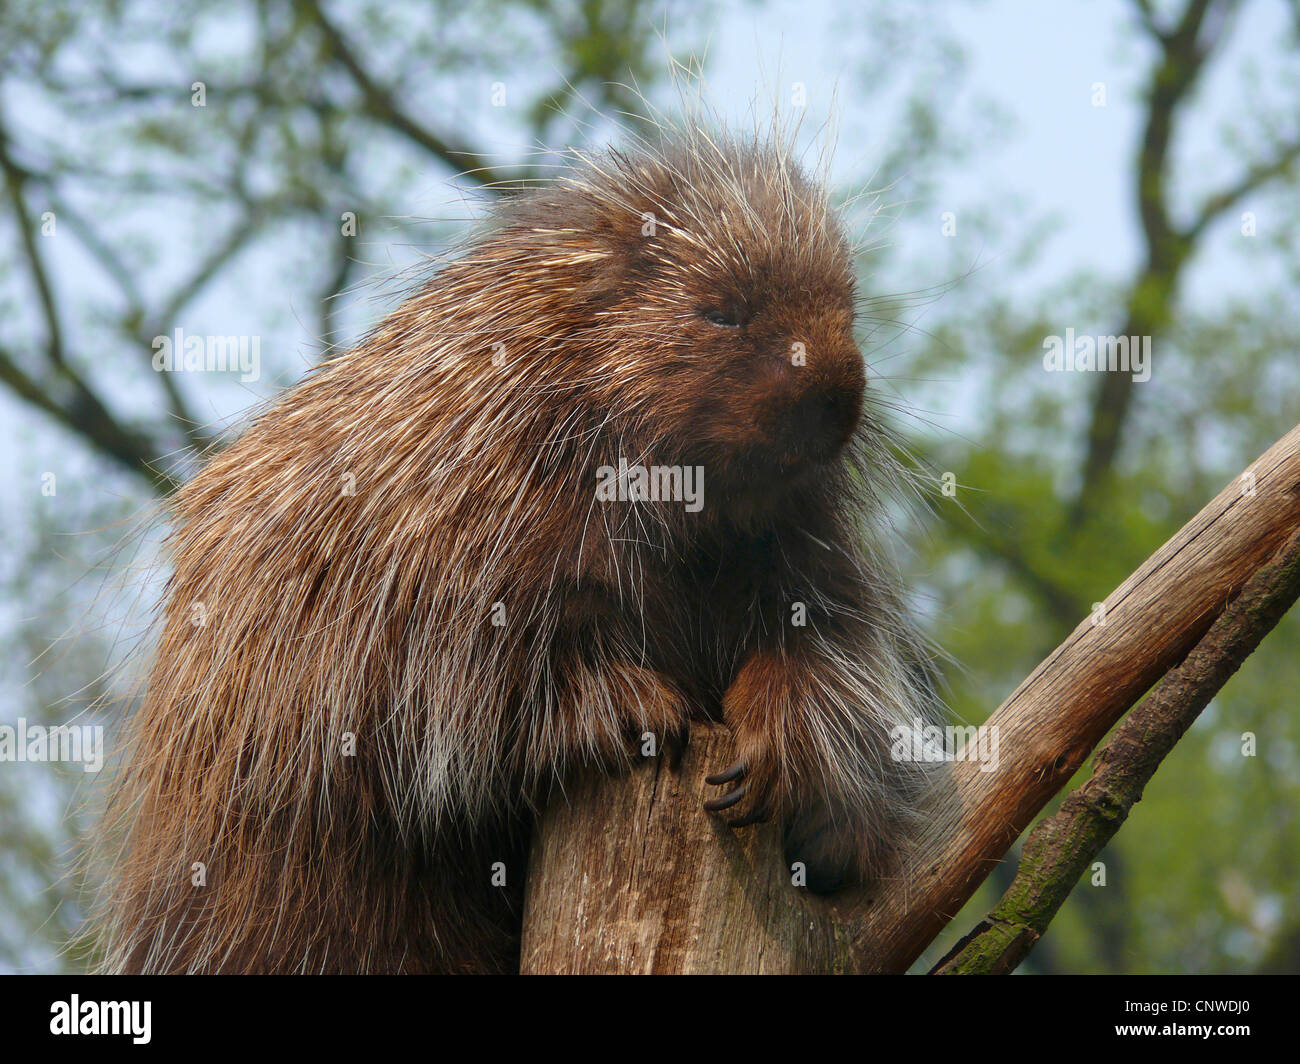 North American porcupine (Erethizon dorsatum), sitting in a tree Stock Photo